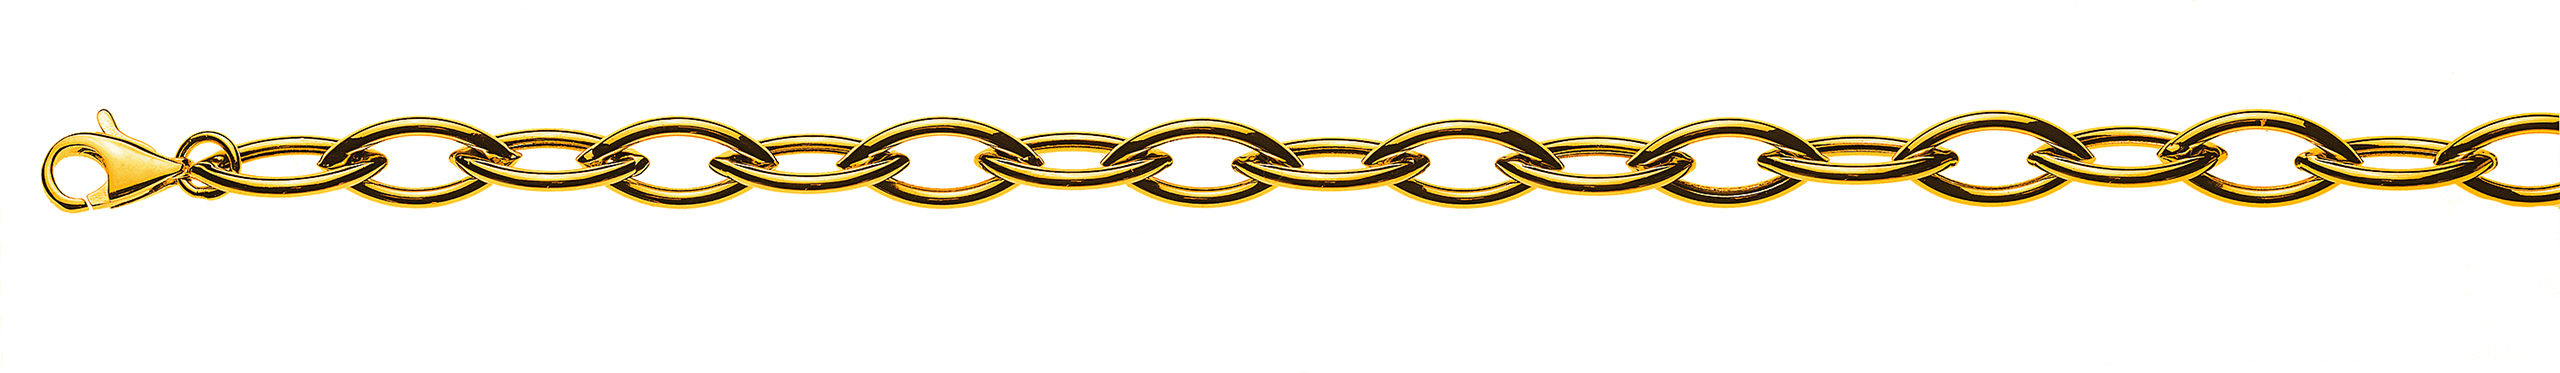 AURONOS Prestige Necklace yellow gold 18K navette chain semi-solid 50cm 7.3mm